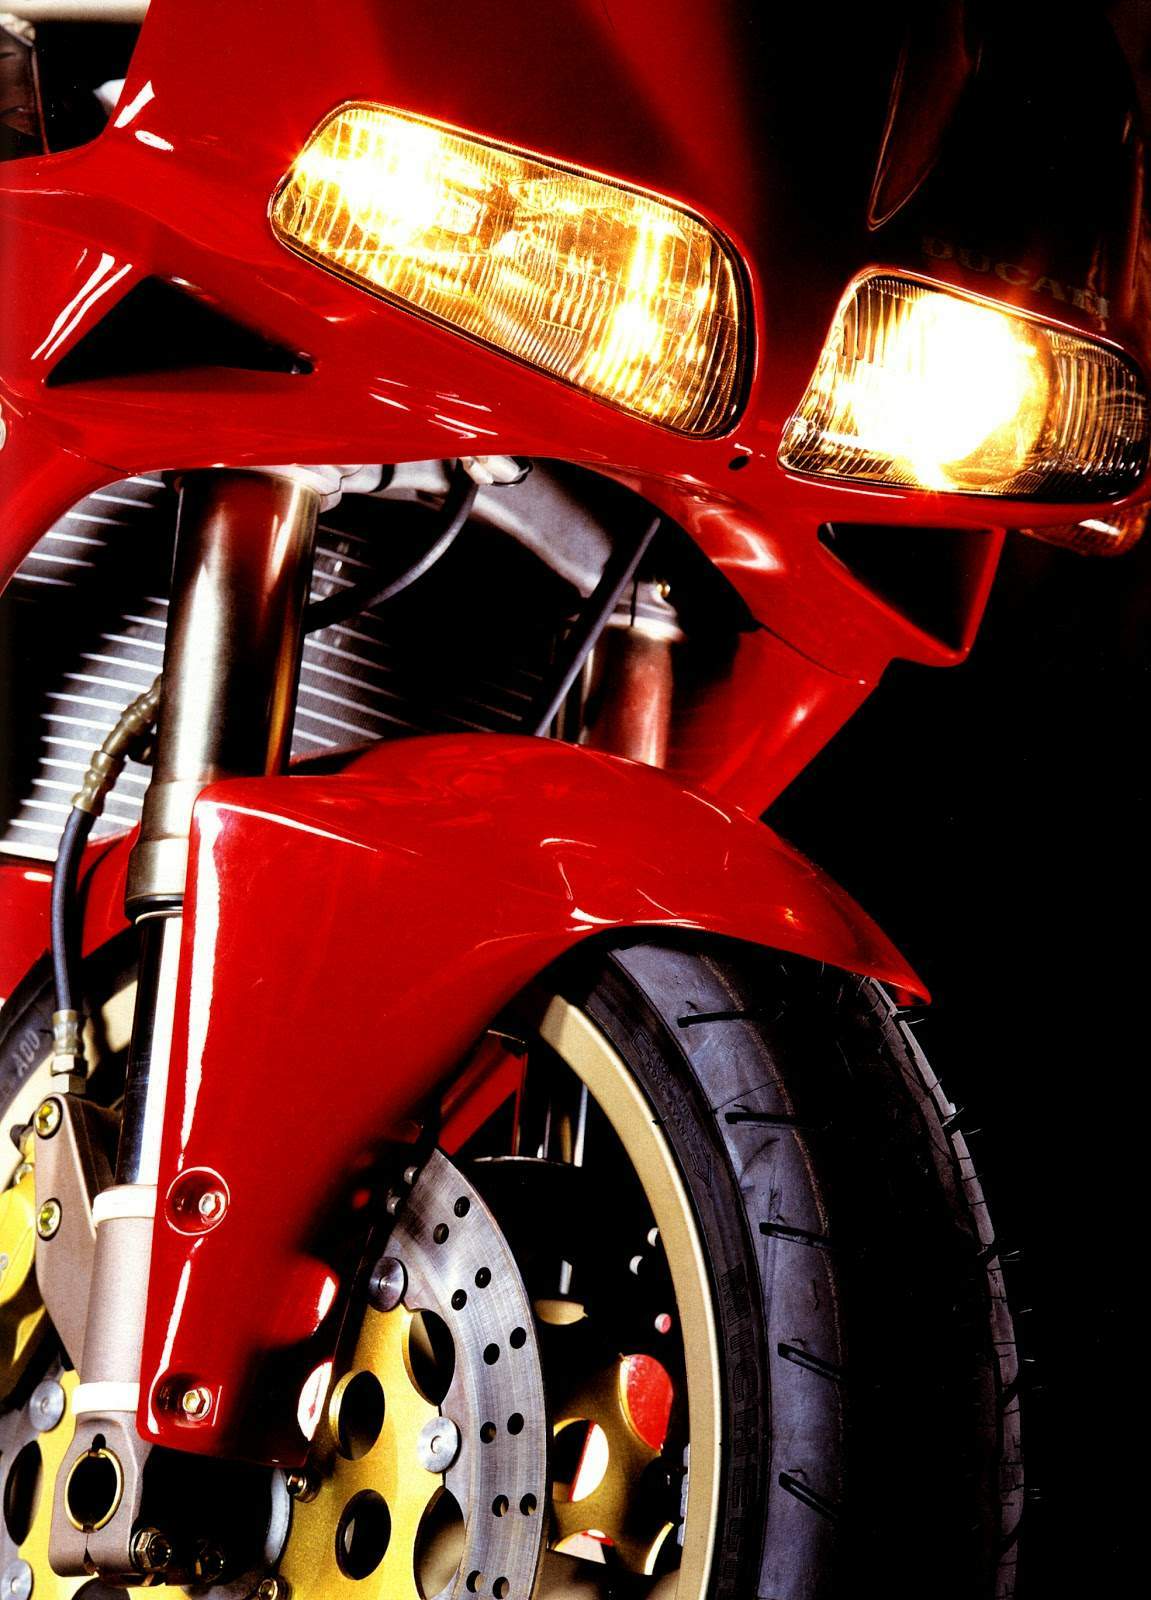 Мотоцикл Ducati 916 1996 фото